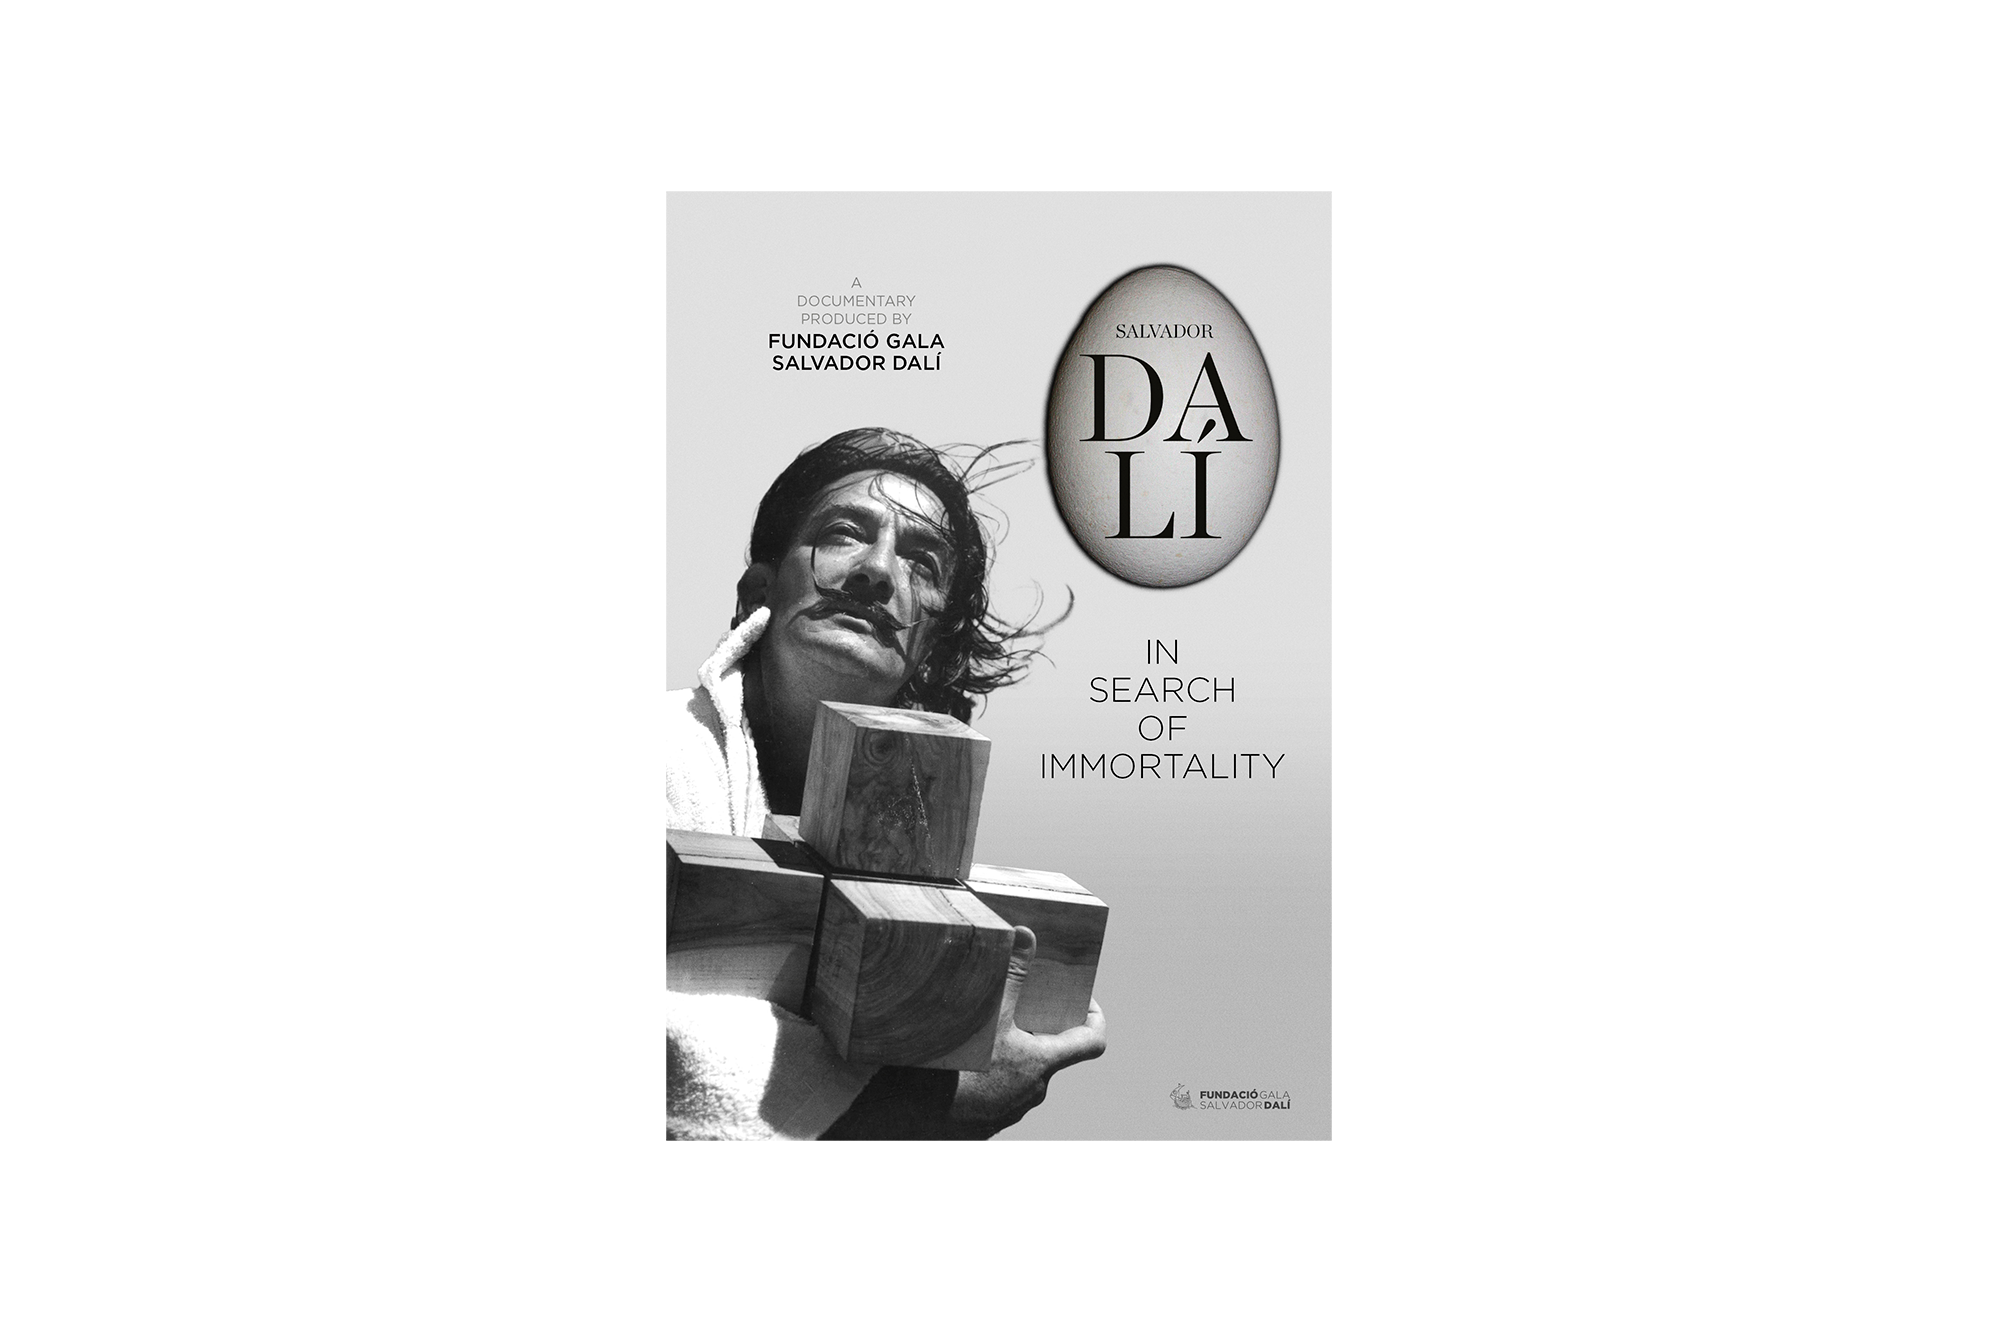 Dalí official trilogy poster